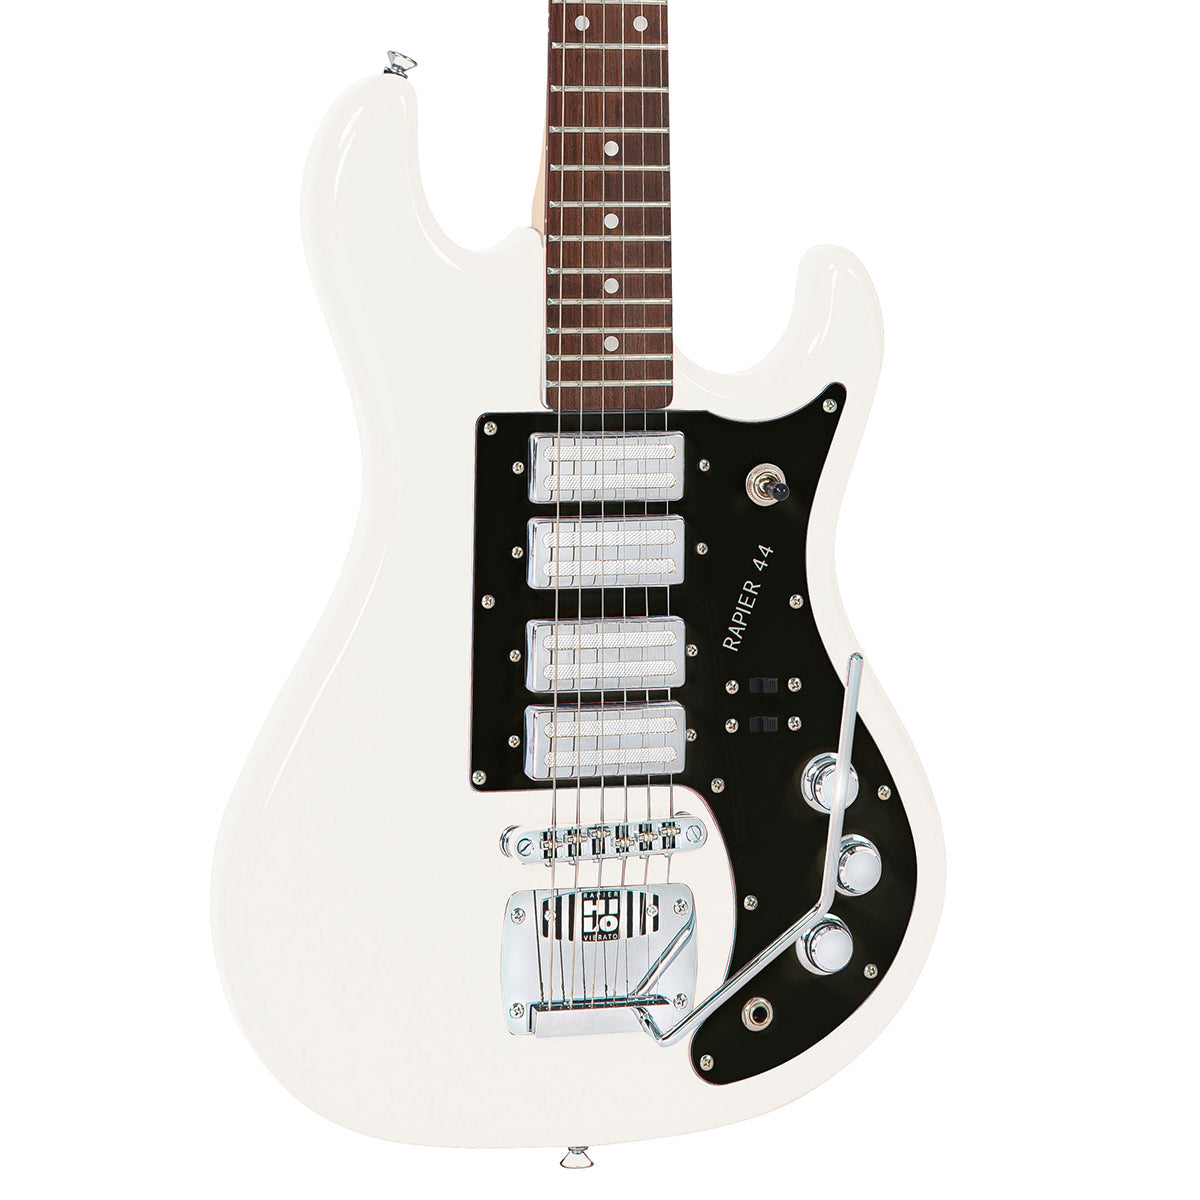 Rapier 44 Electric Guitar ~ Arctic White, Electric Guitar for sale at Richards Guitars.